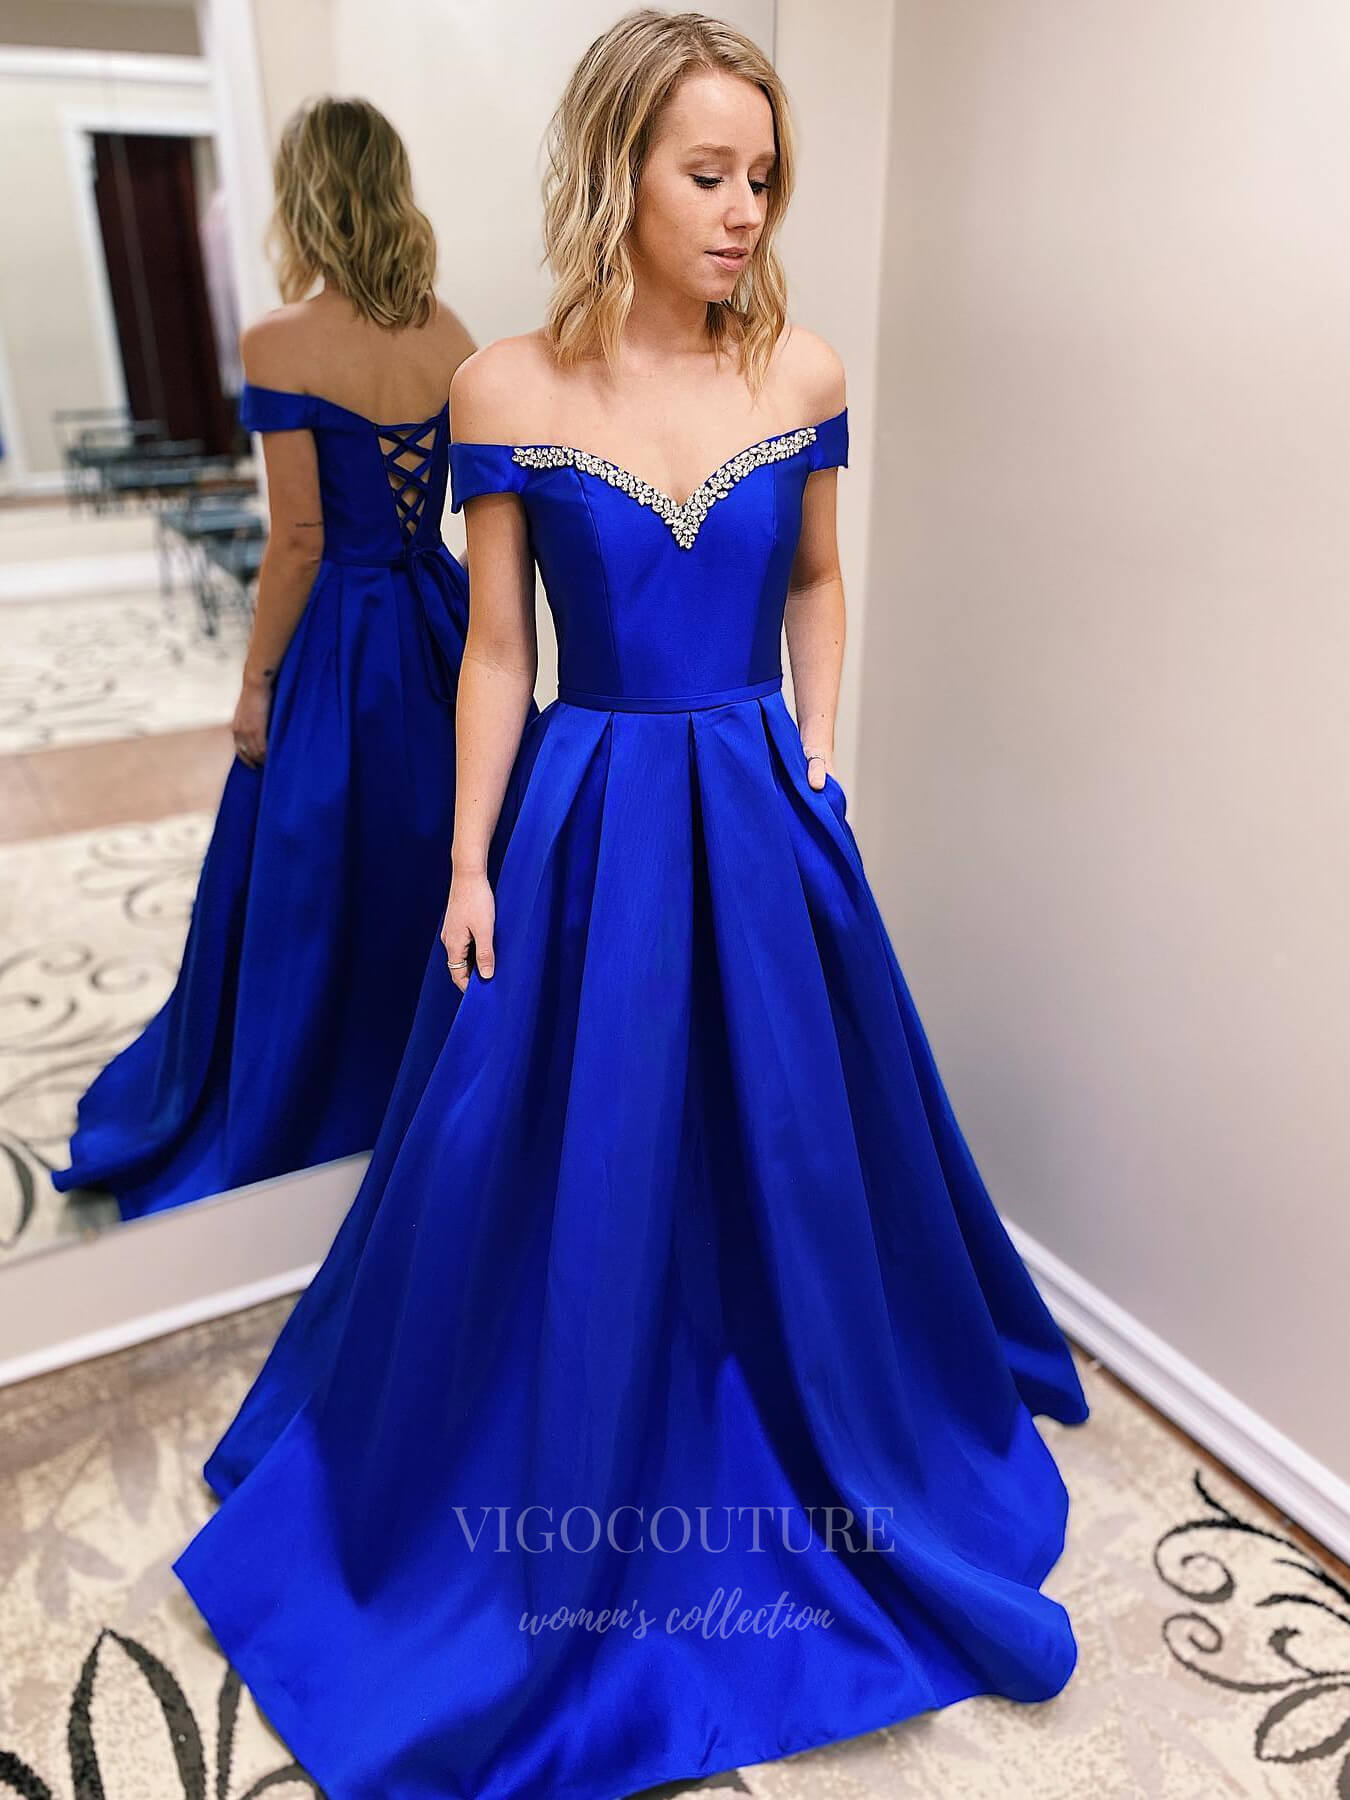 vigocouture-Satin V-Neck A-Line Spaghetti Strap Prom Dress 20939-Prom Dresses-vigocouture-Blue-US2-